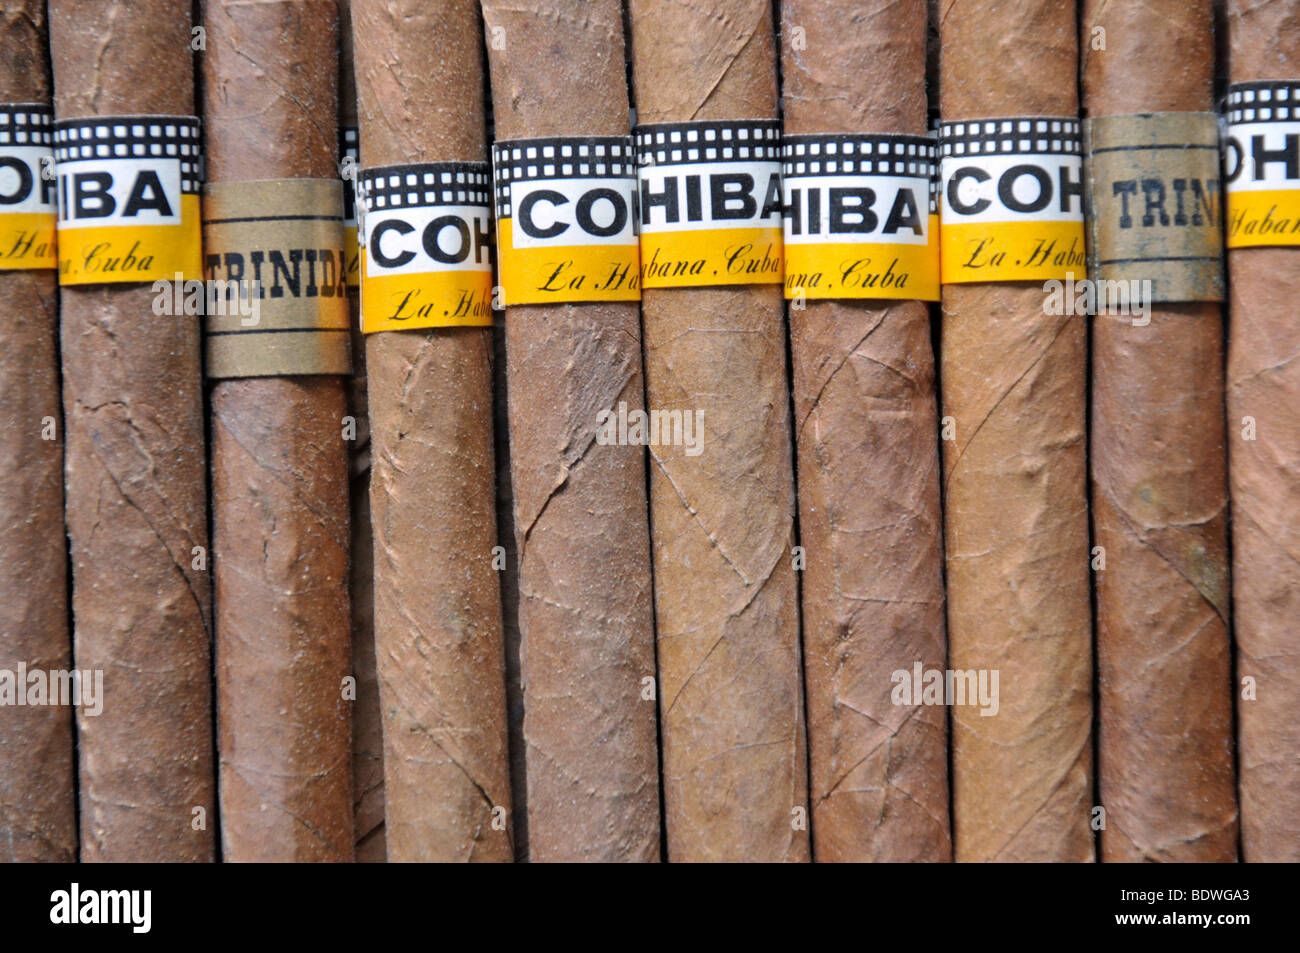 Sigari cubani immagine stock editoriale. Immagine di cuba - 60255449